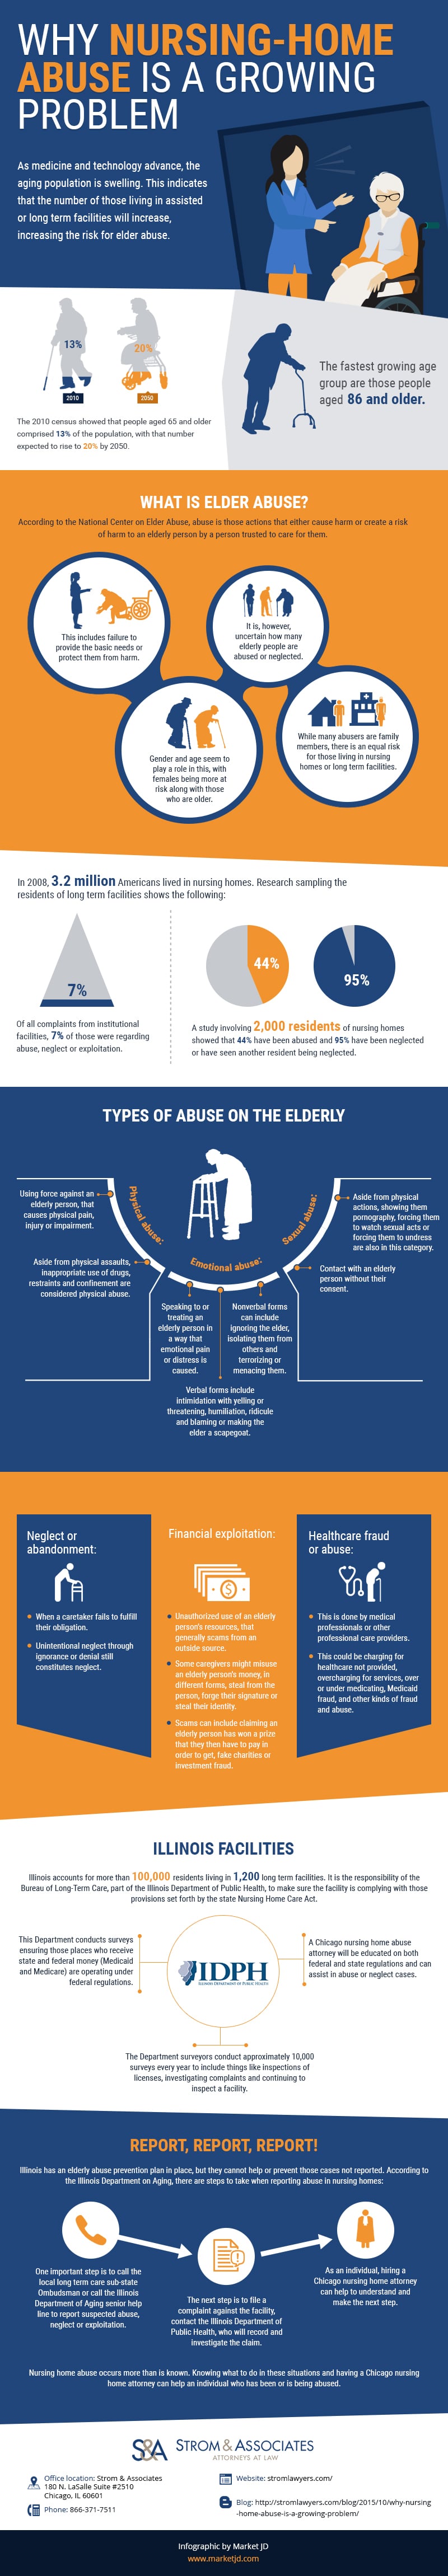 Nursing home abuse growing infographic